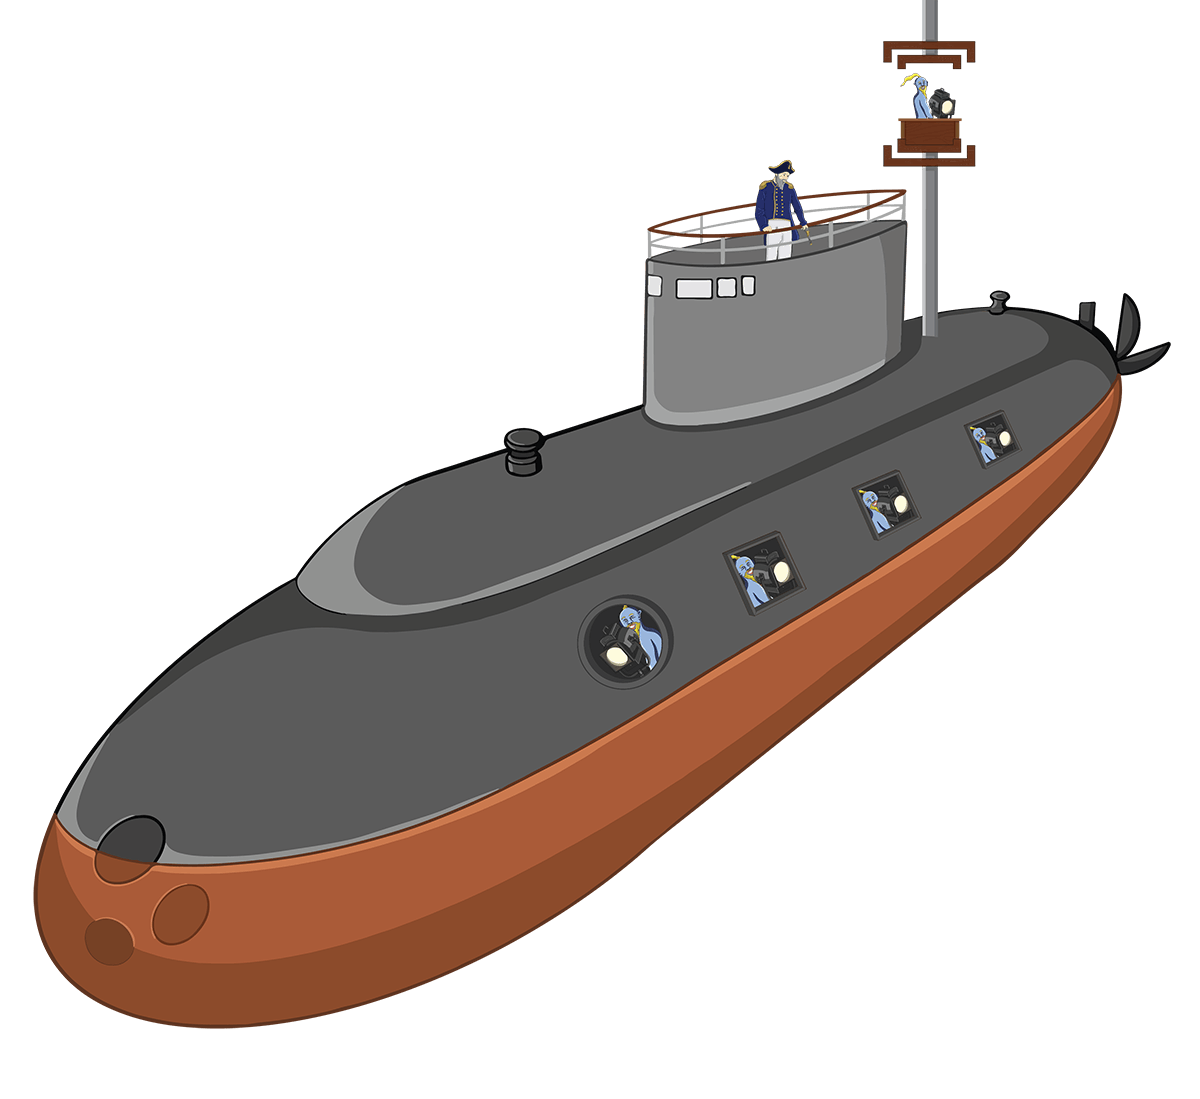 A flying submarine ship